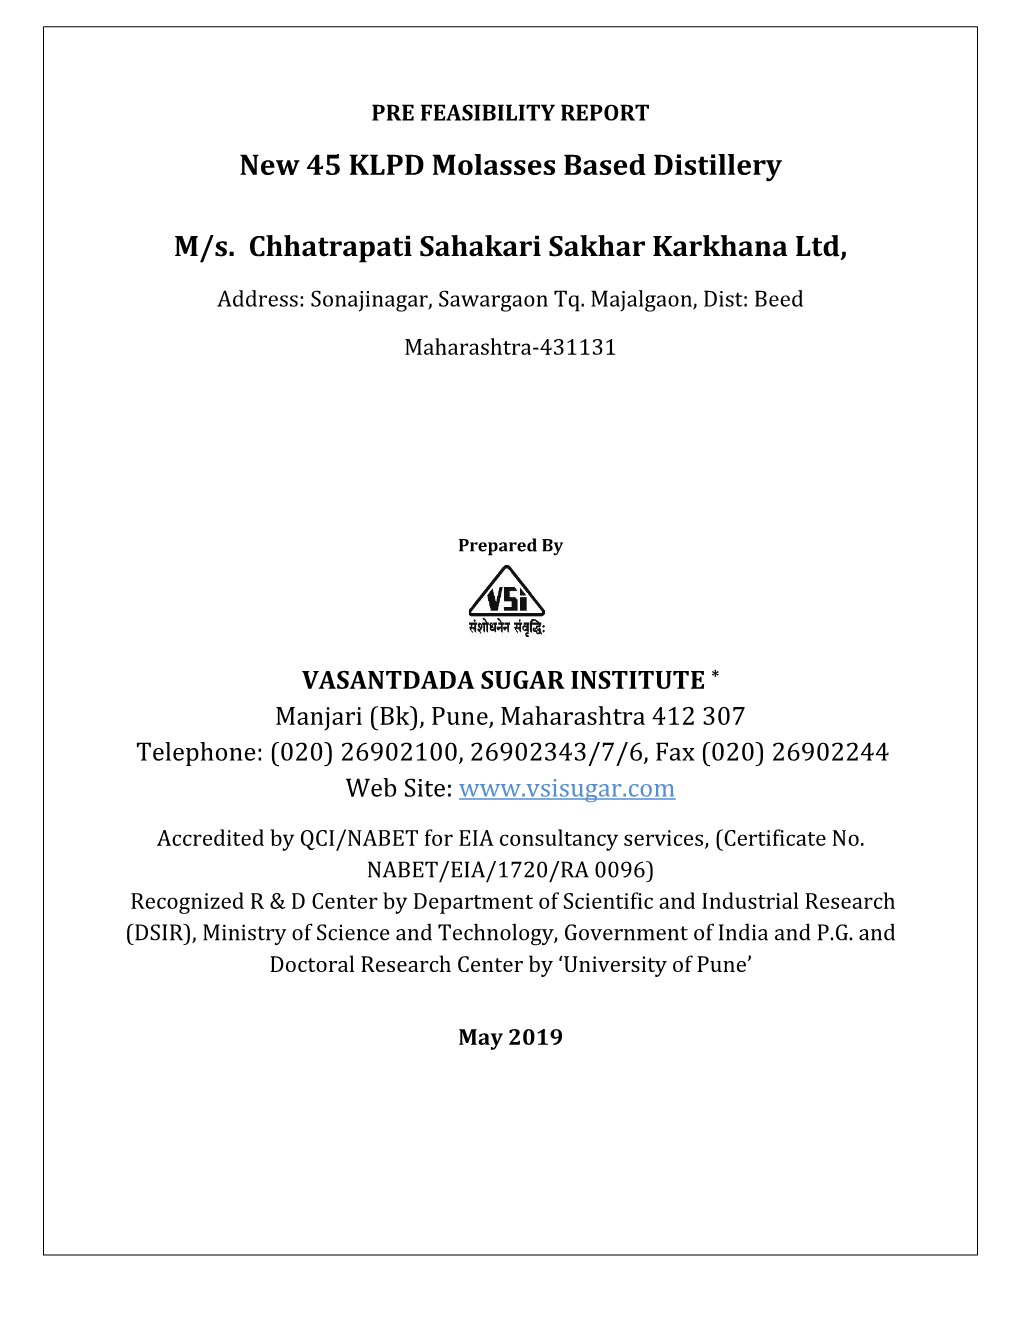 New 45 KLPD Molasses Based Distillery M/S. Chhatrapati Sahakari Sakhar Karkhana Ltd